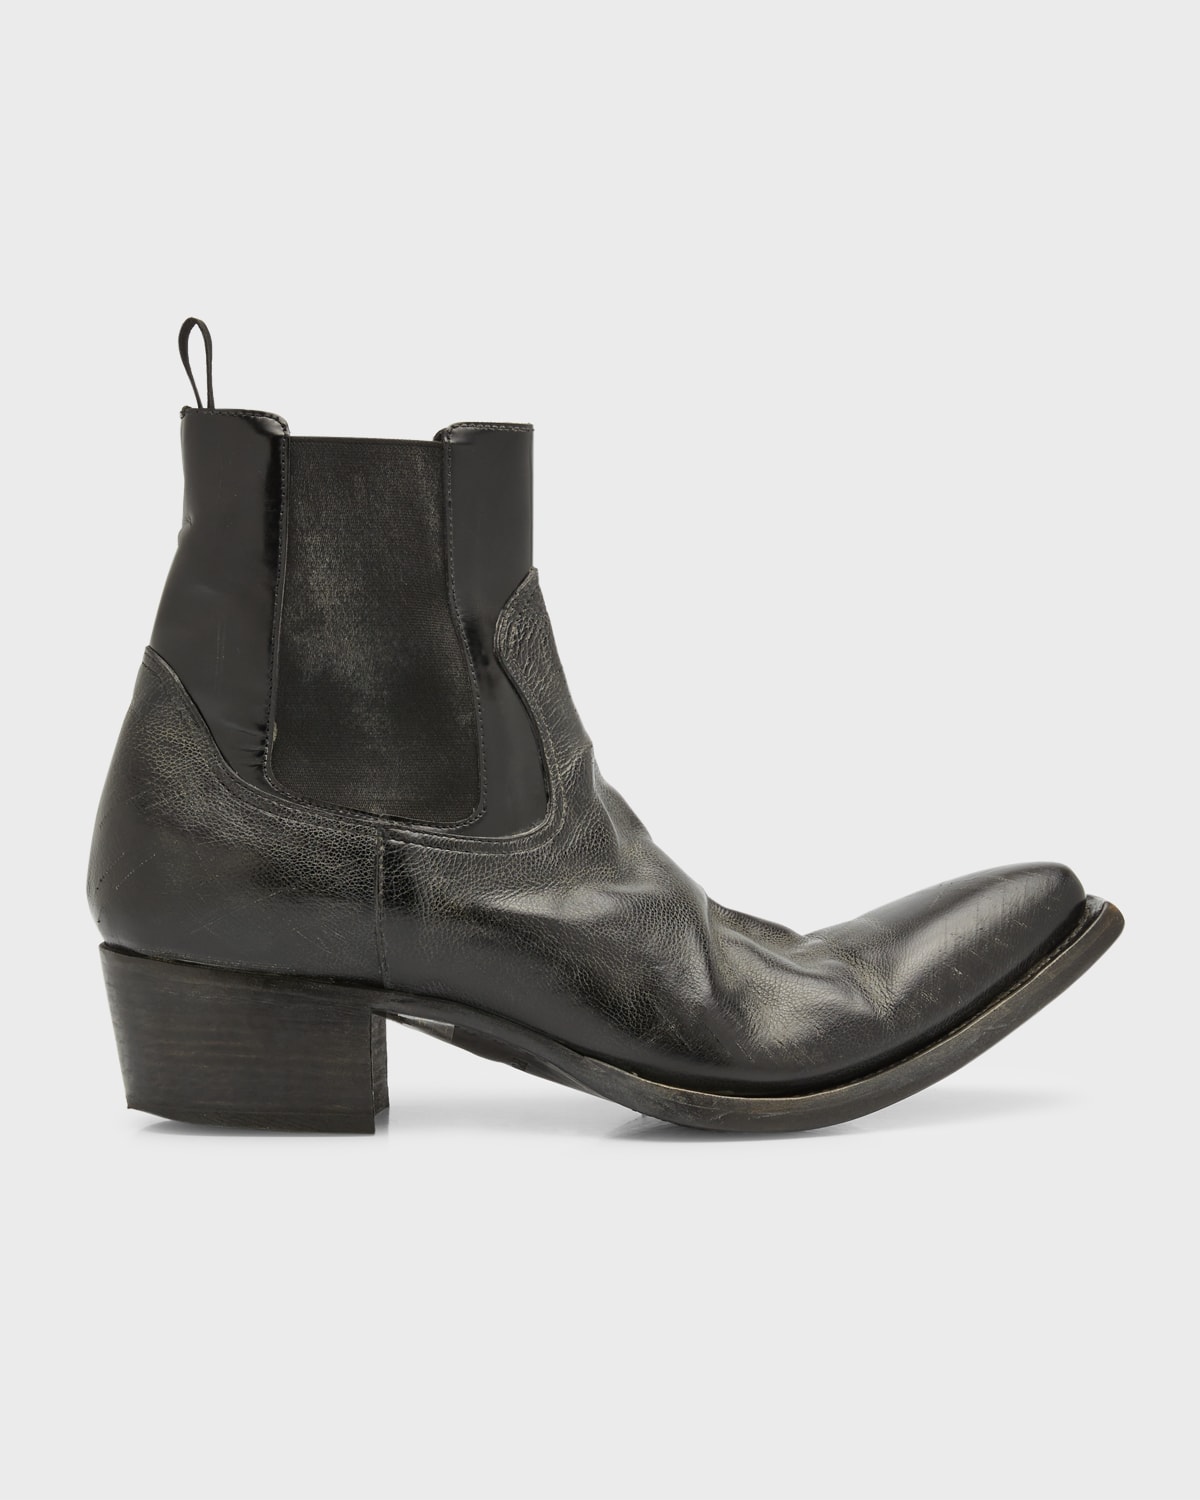 Prada Saffiano Leather Chelsea Boots, Black | Neiman Marcus